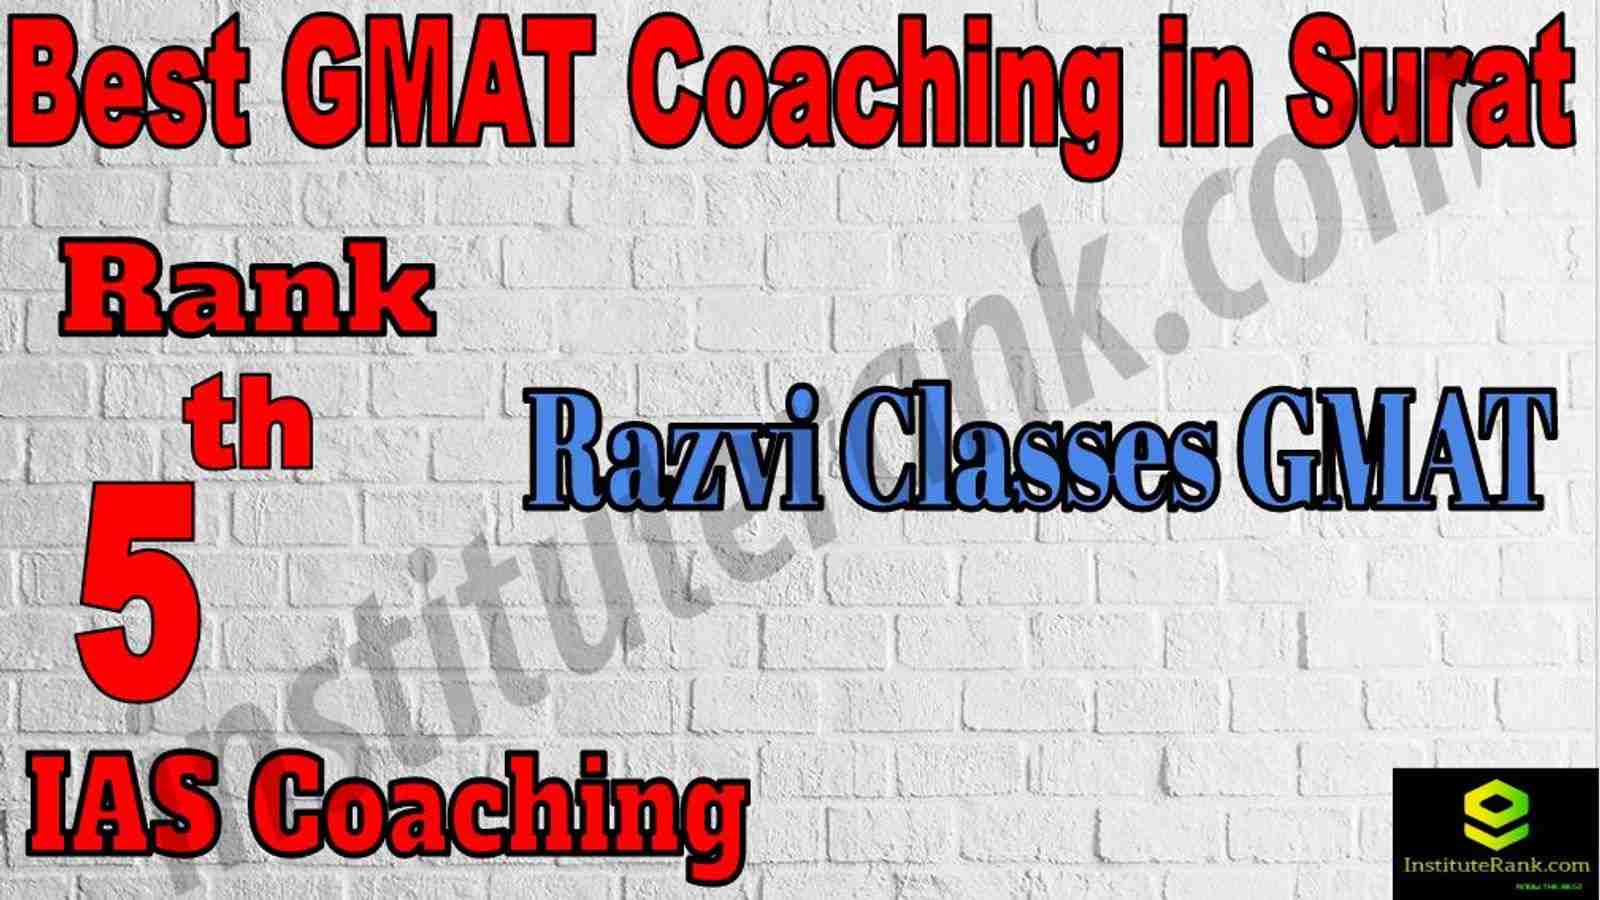 5th Best GMAT Coaching in Surat